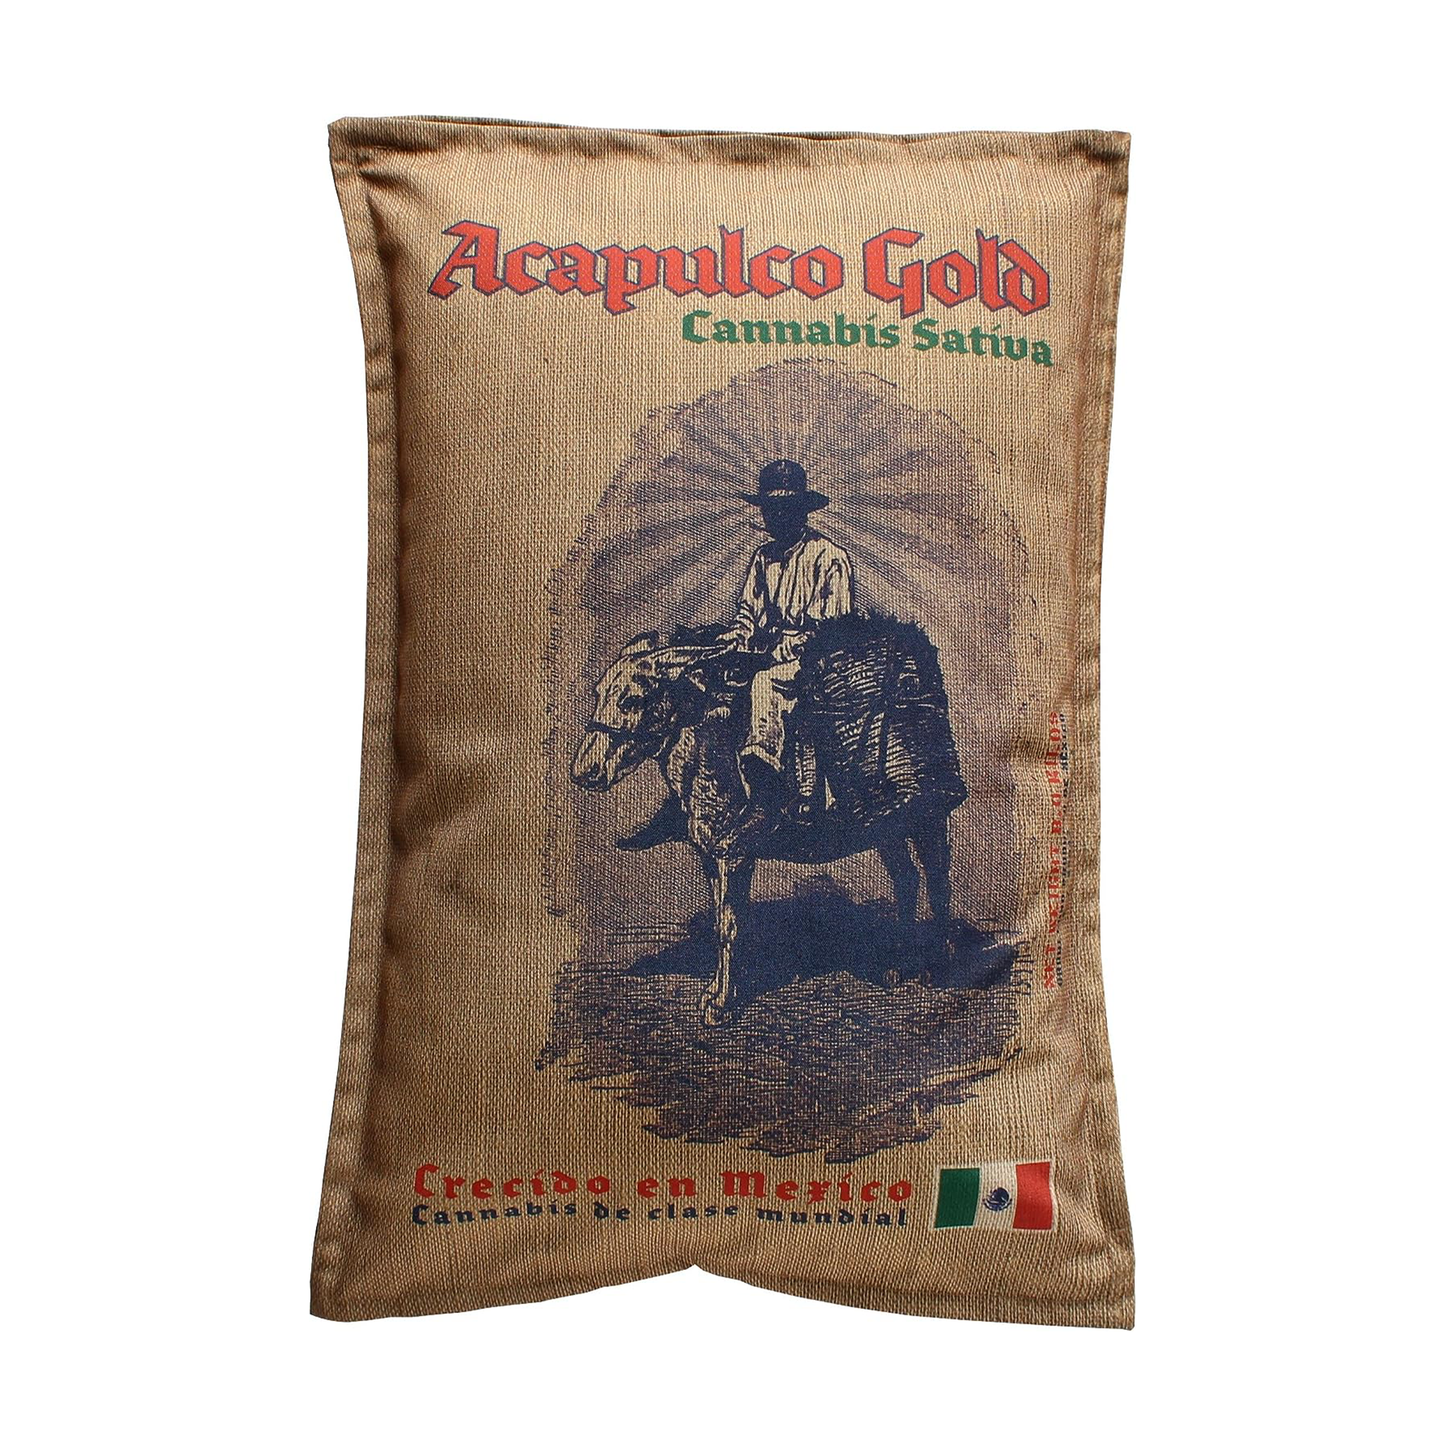 Acapulco Gold Burlap Bale Sack of Weed Pillowcase